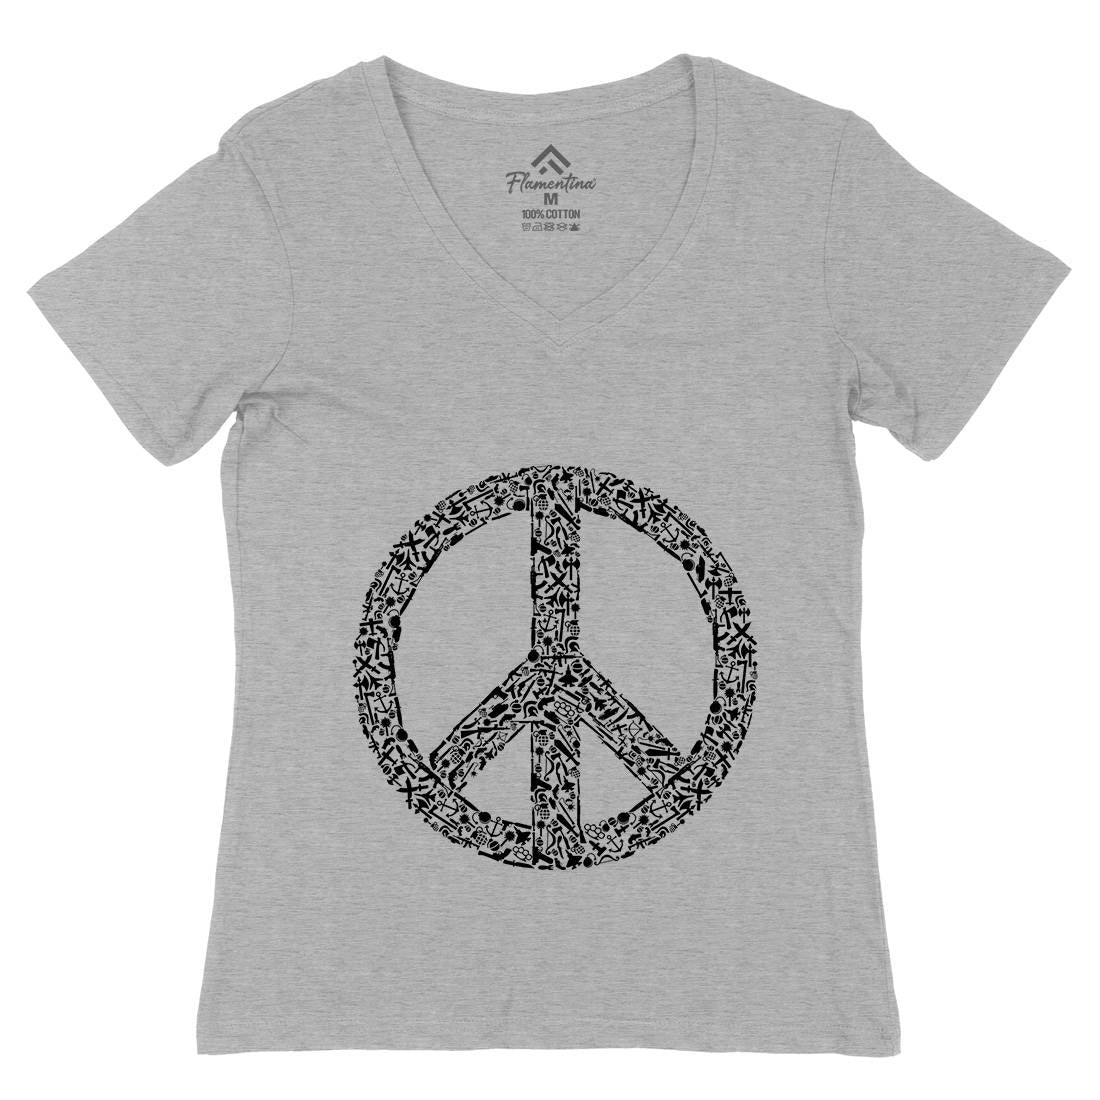 War Womens Organic V-Neck T-Shirt Peace B093